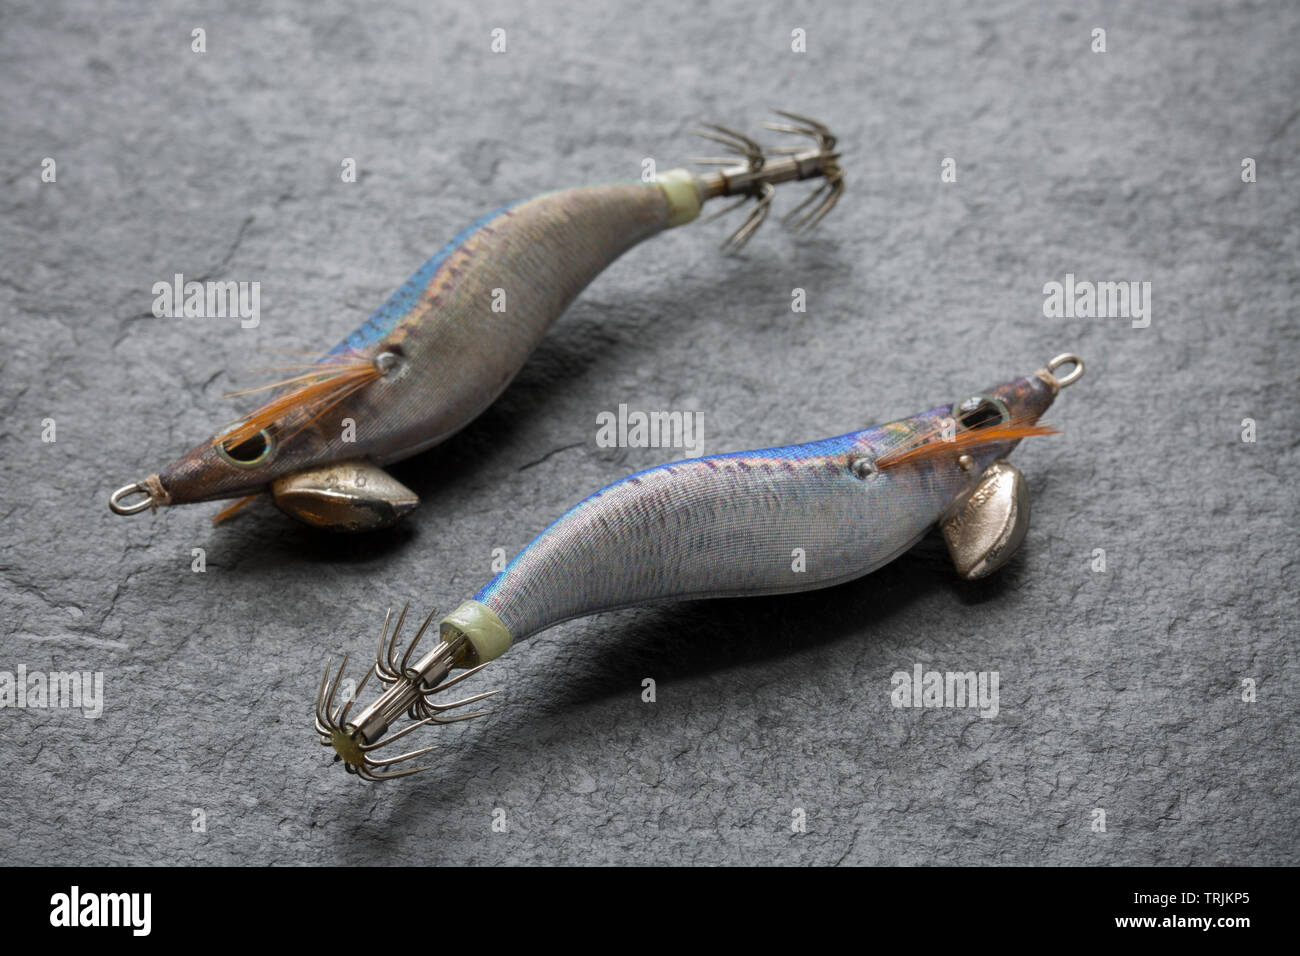 Two Yamashita squid jigs, or lures. Squid fishing has become